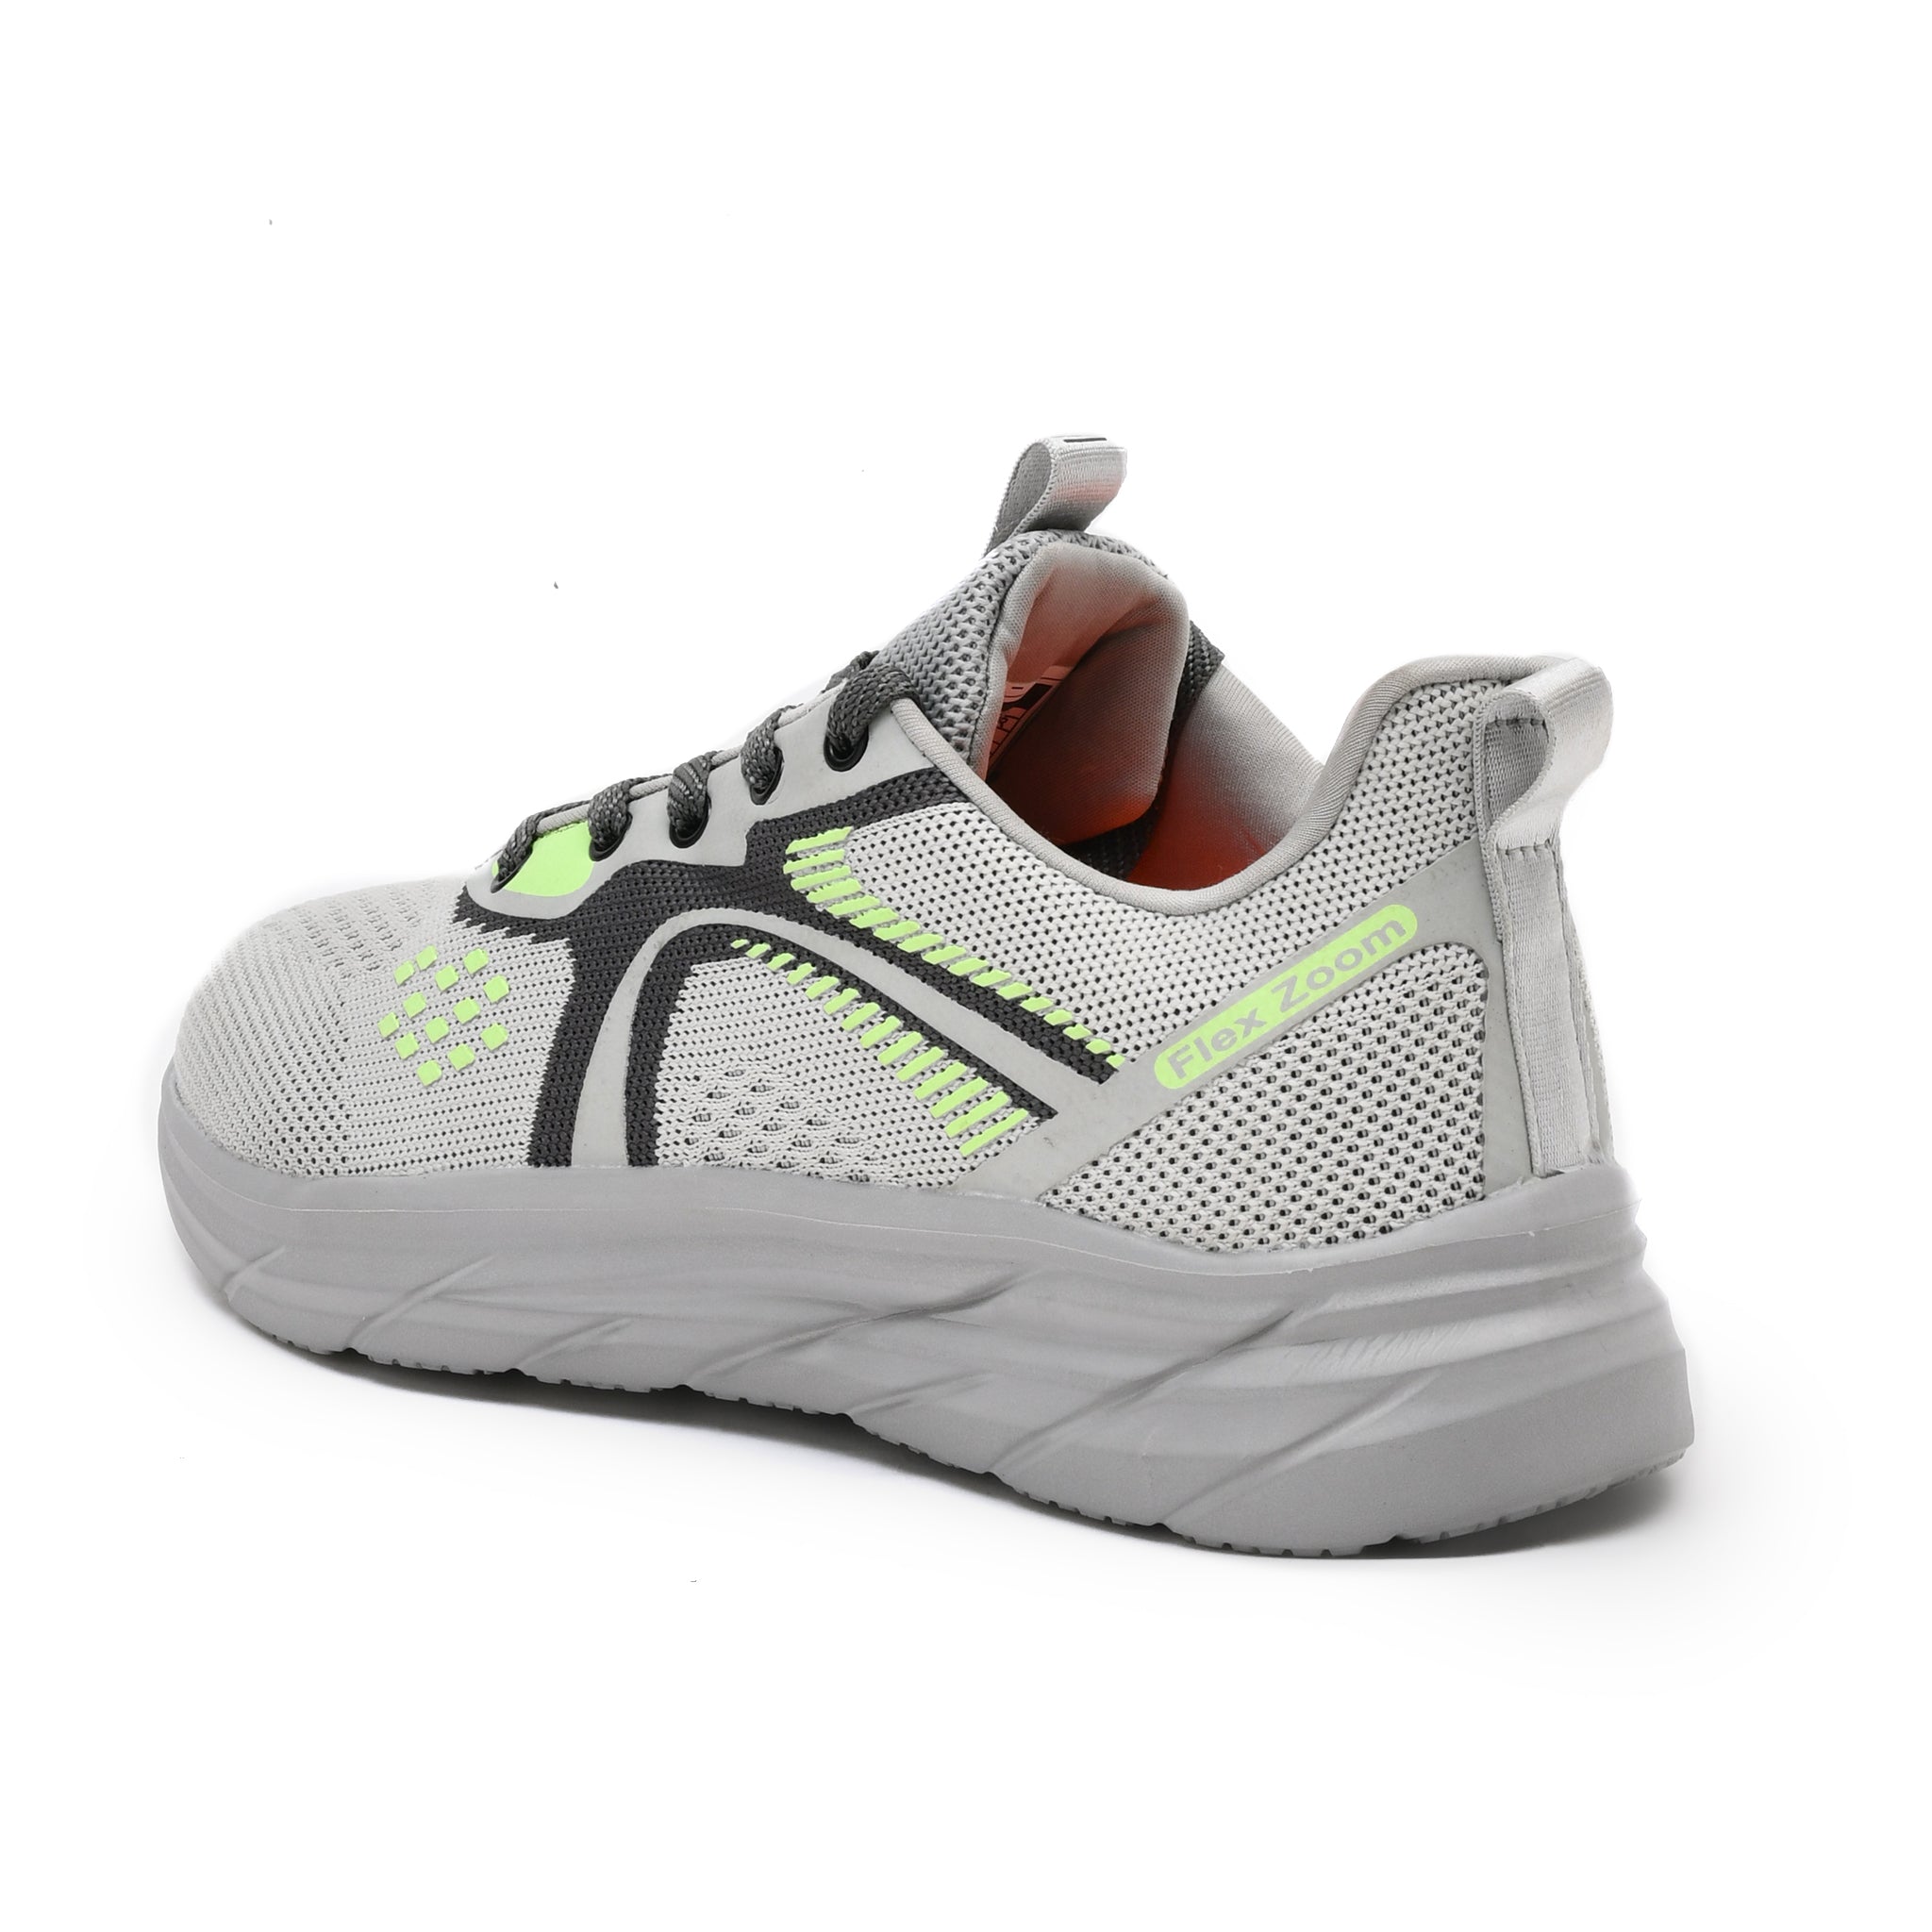 Impakto Night Racer Men's Grey Running Shoes